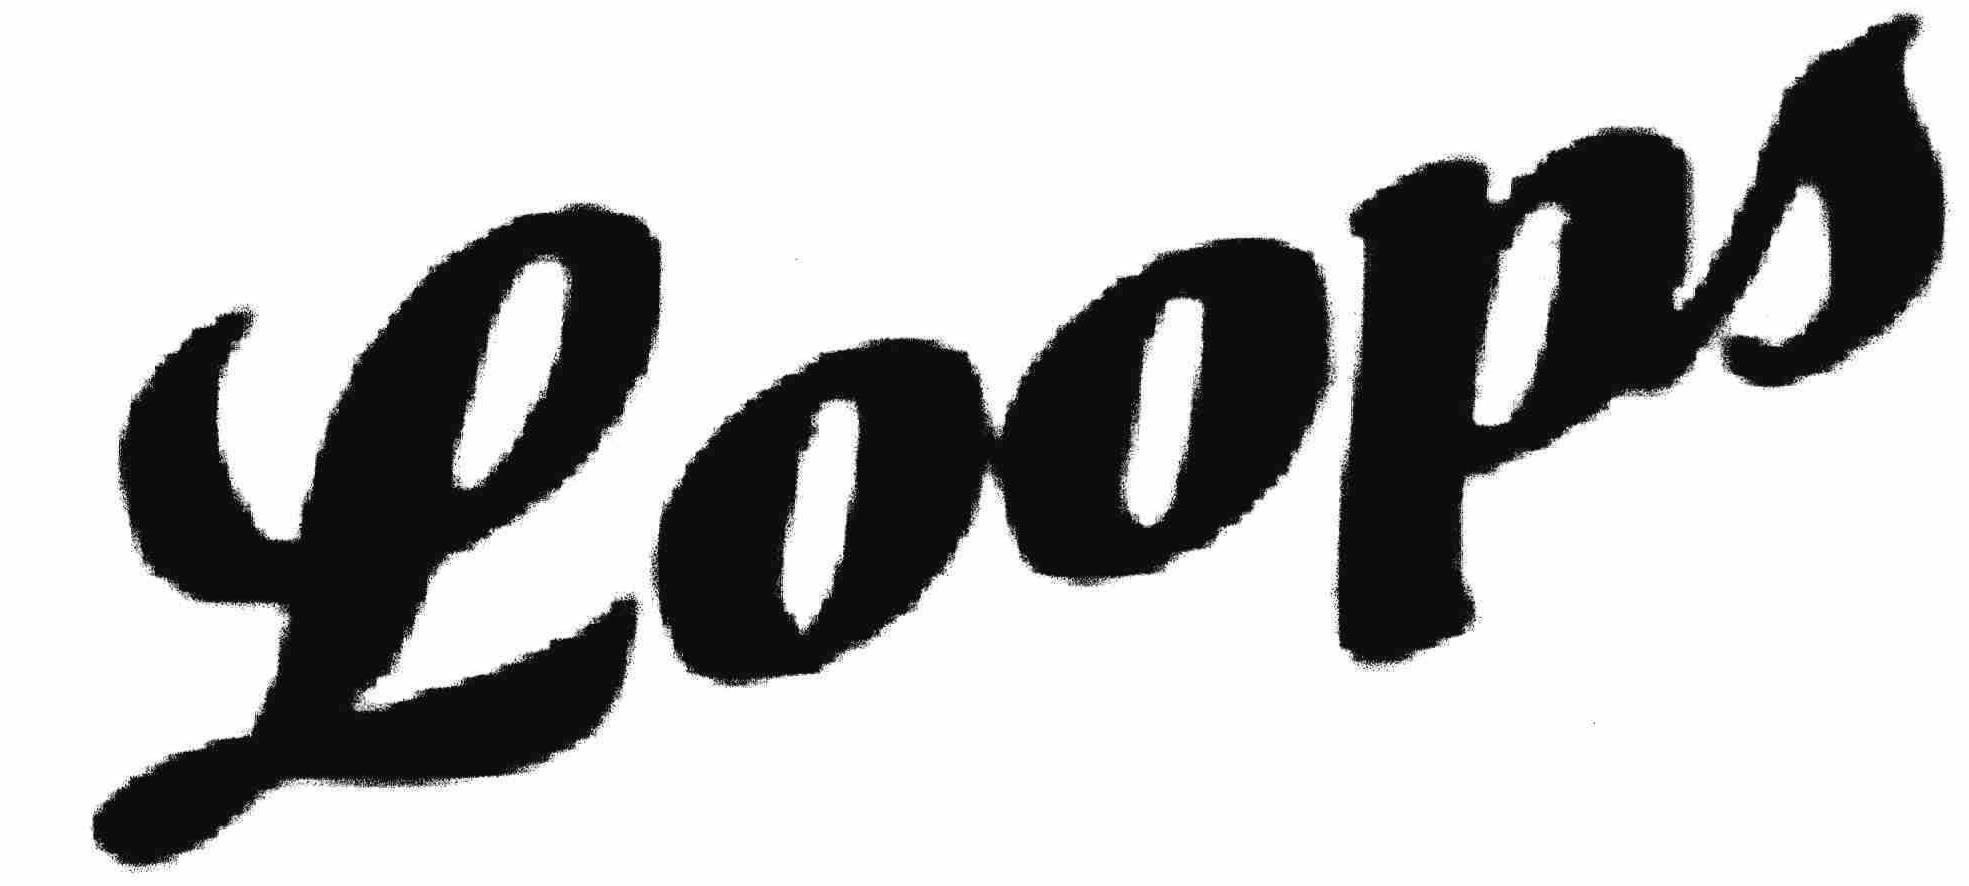 Trademark Logo LOOPS